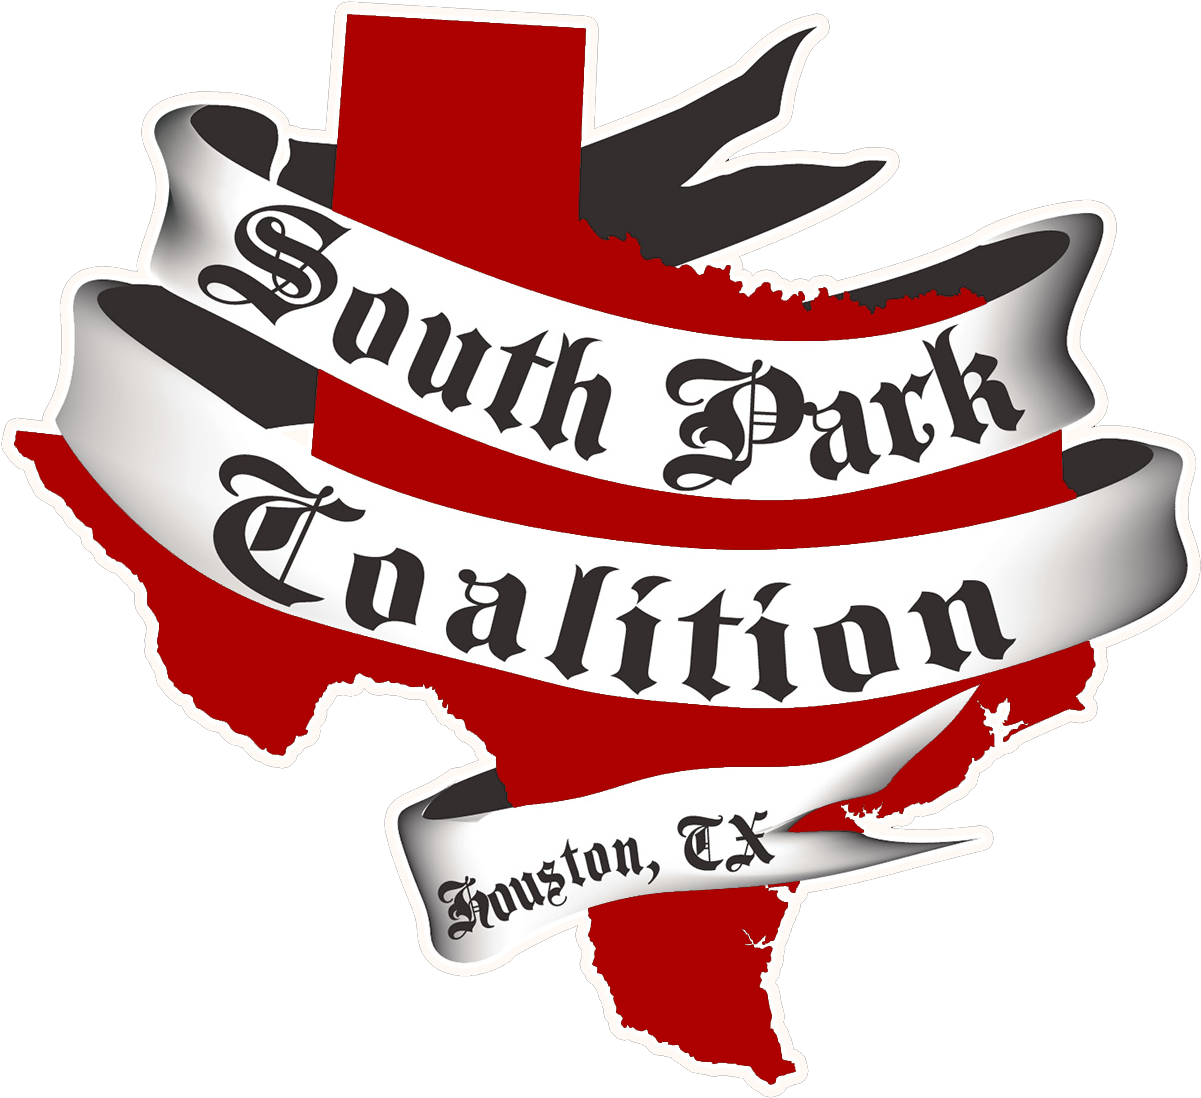 South Park Coalition Logo (1224x1224)